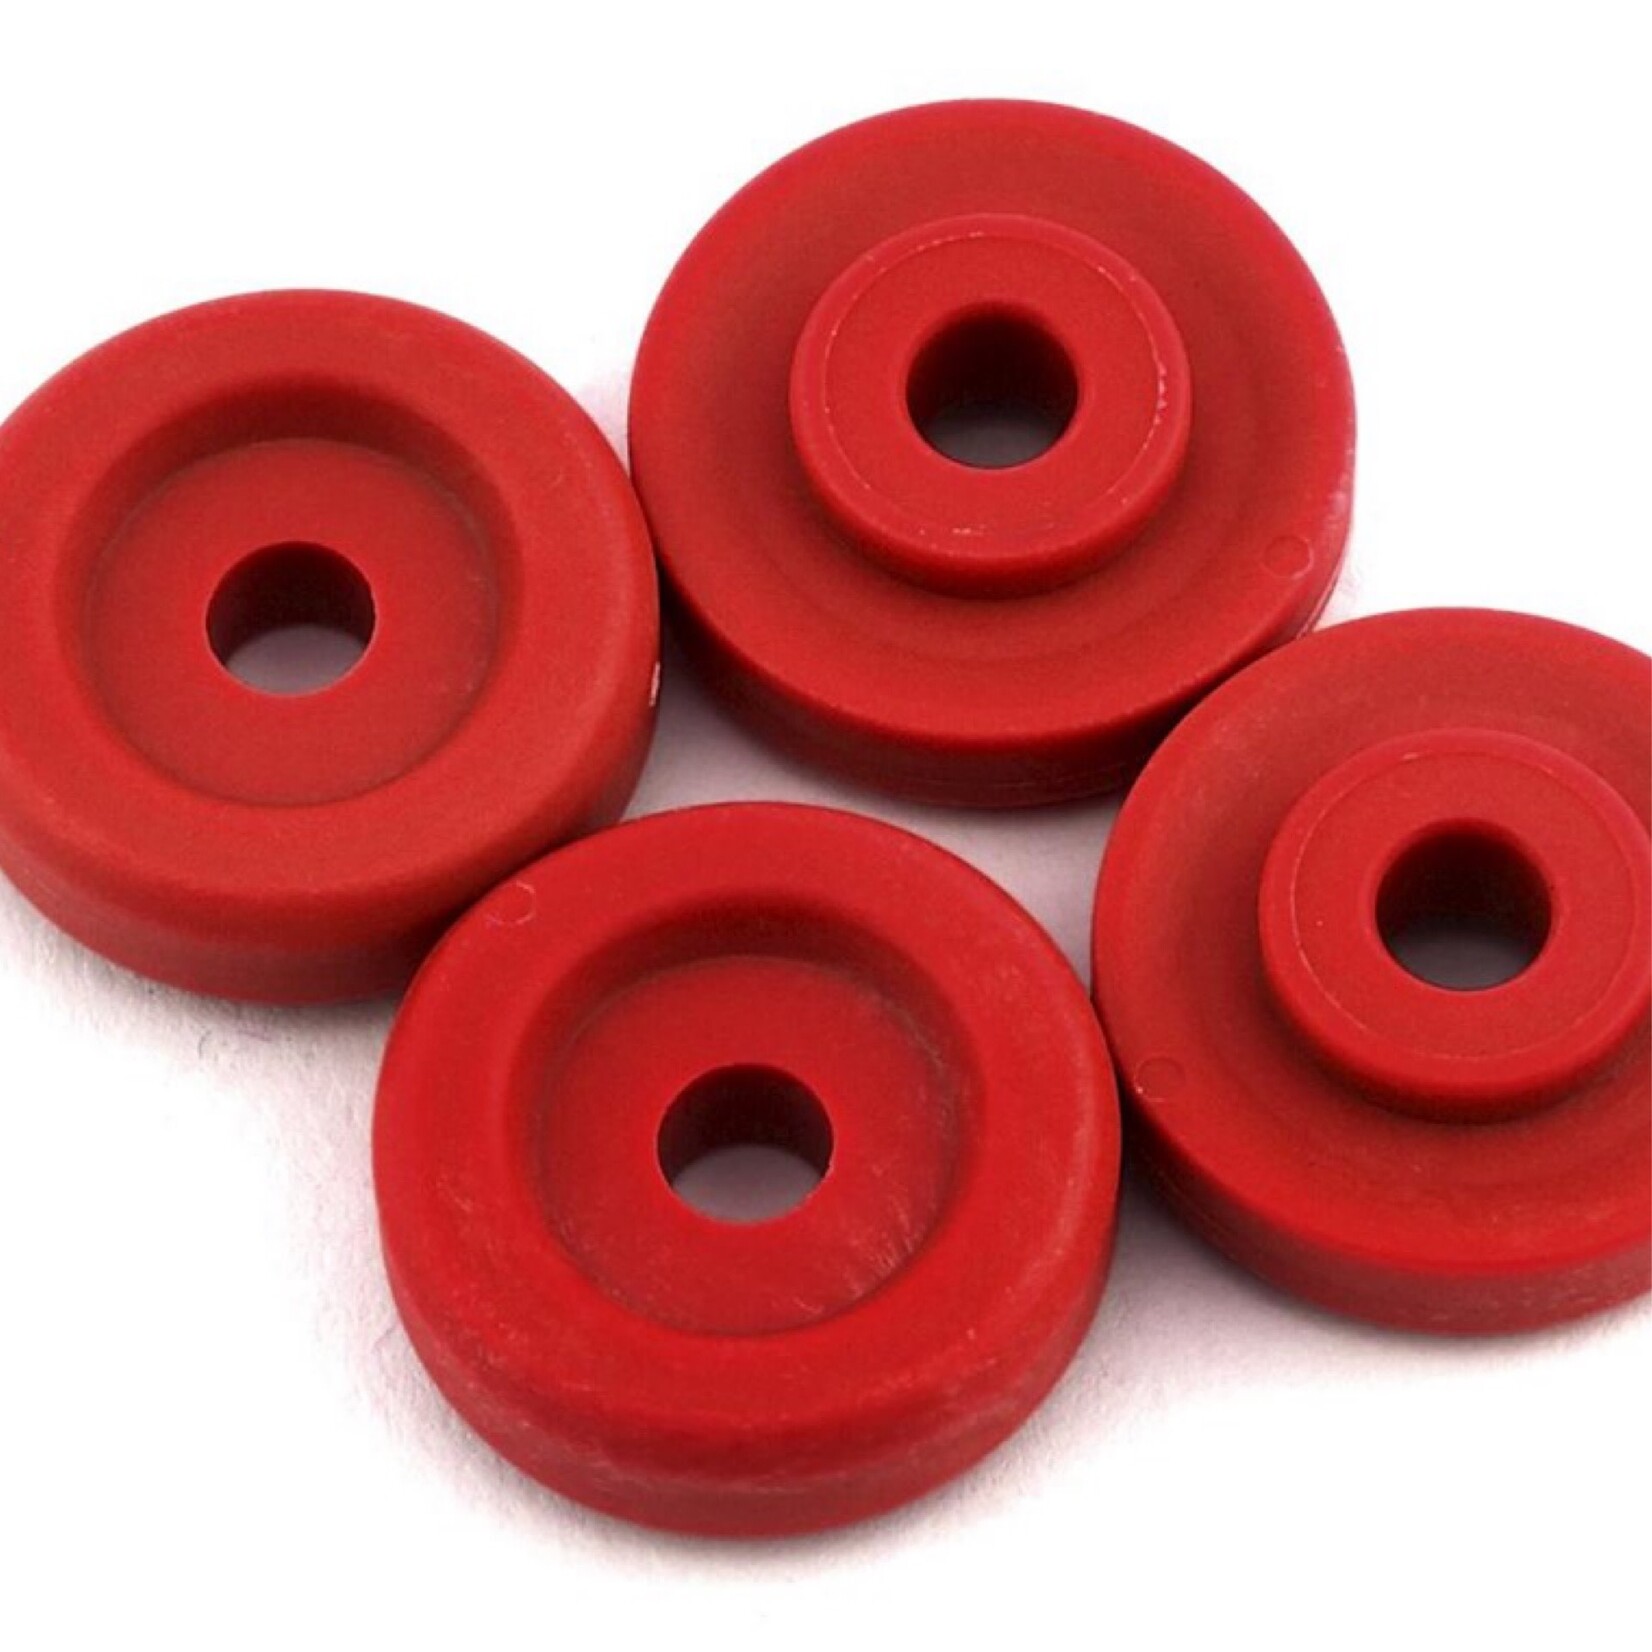 Traxxas Traxxas Maxx Wheel Washers (Red) (4) #8957R